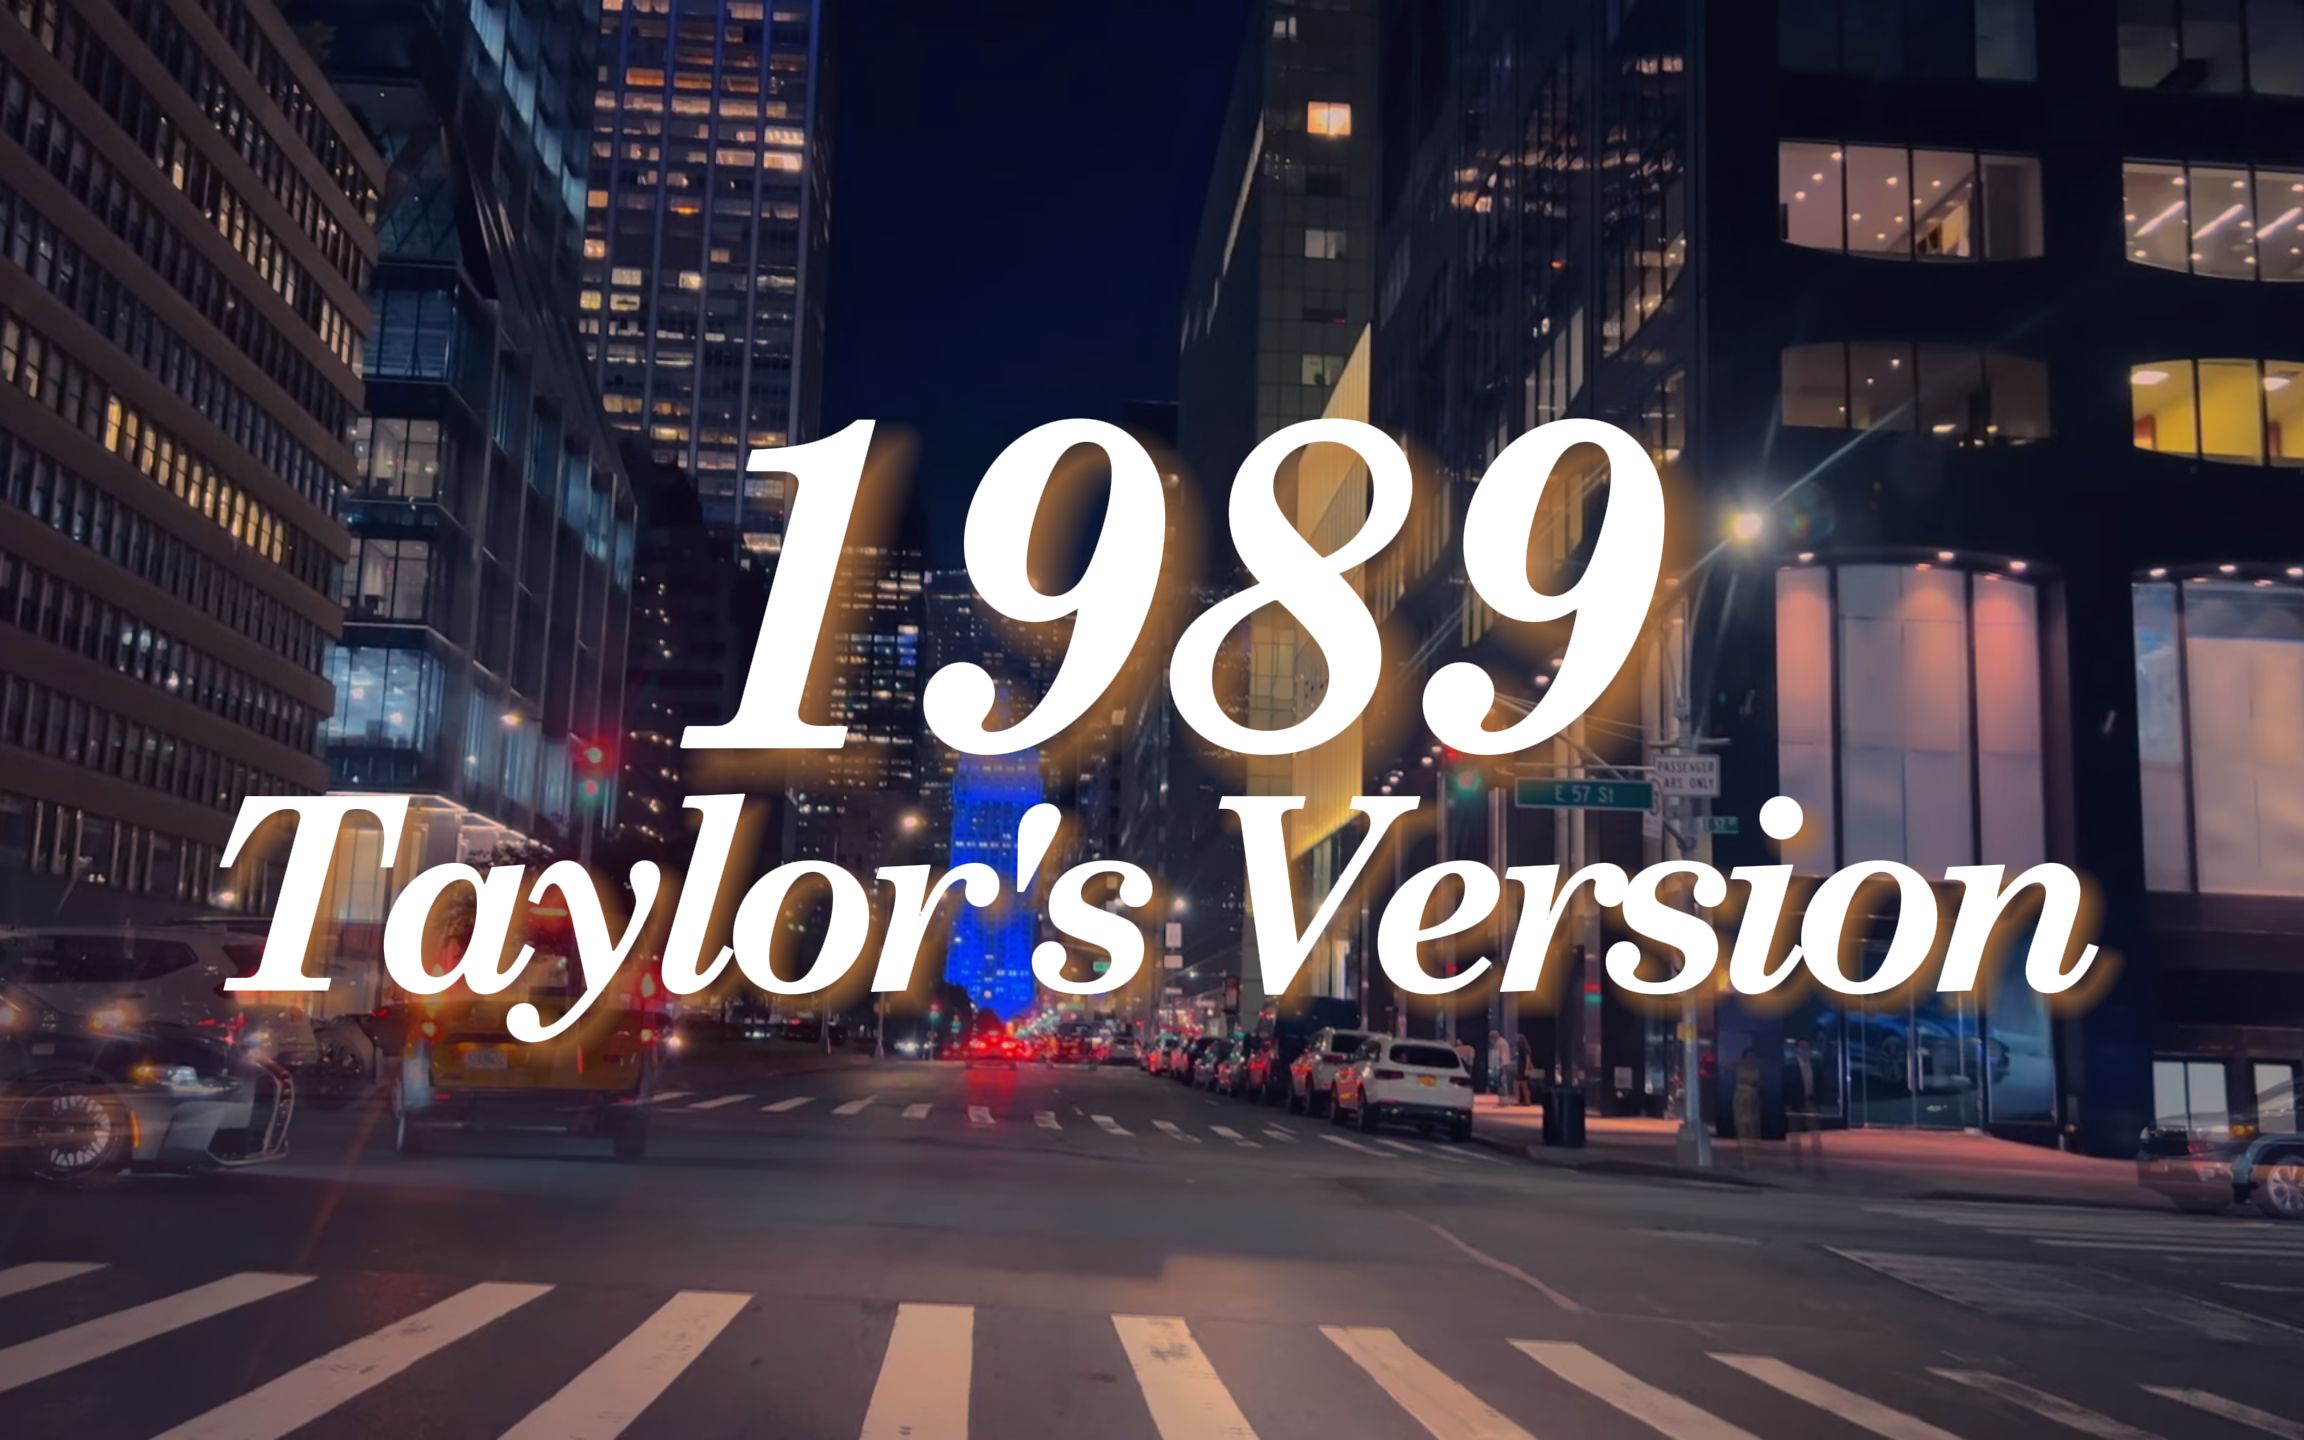 【Taylor Swift】-1989(Taylor's Version)全专|在纽约兜风|学习歌单